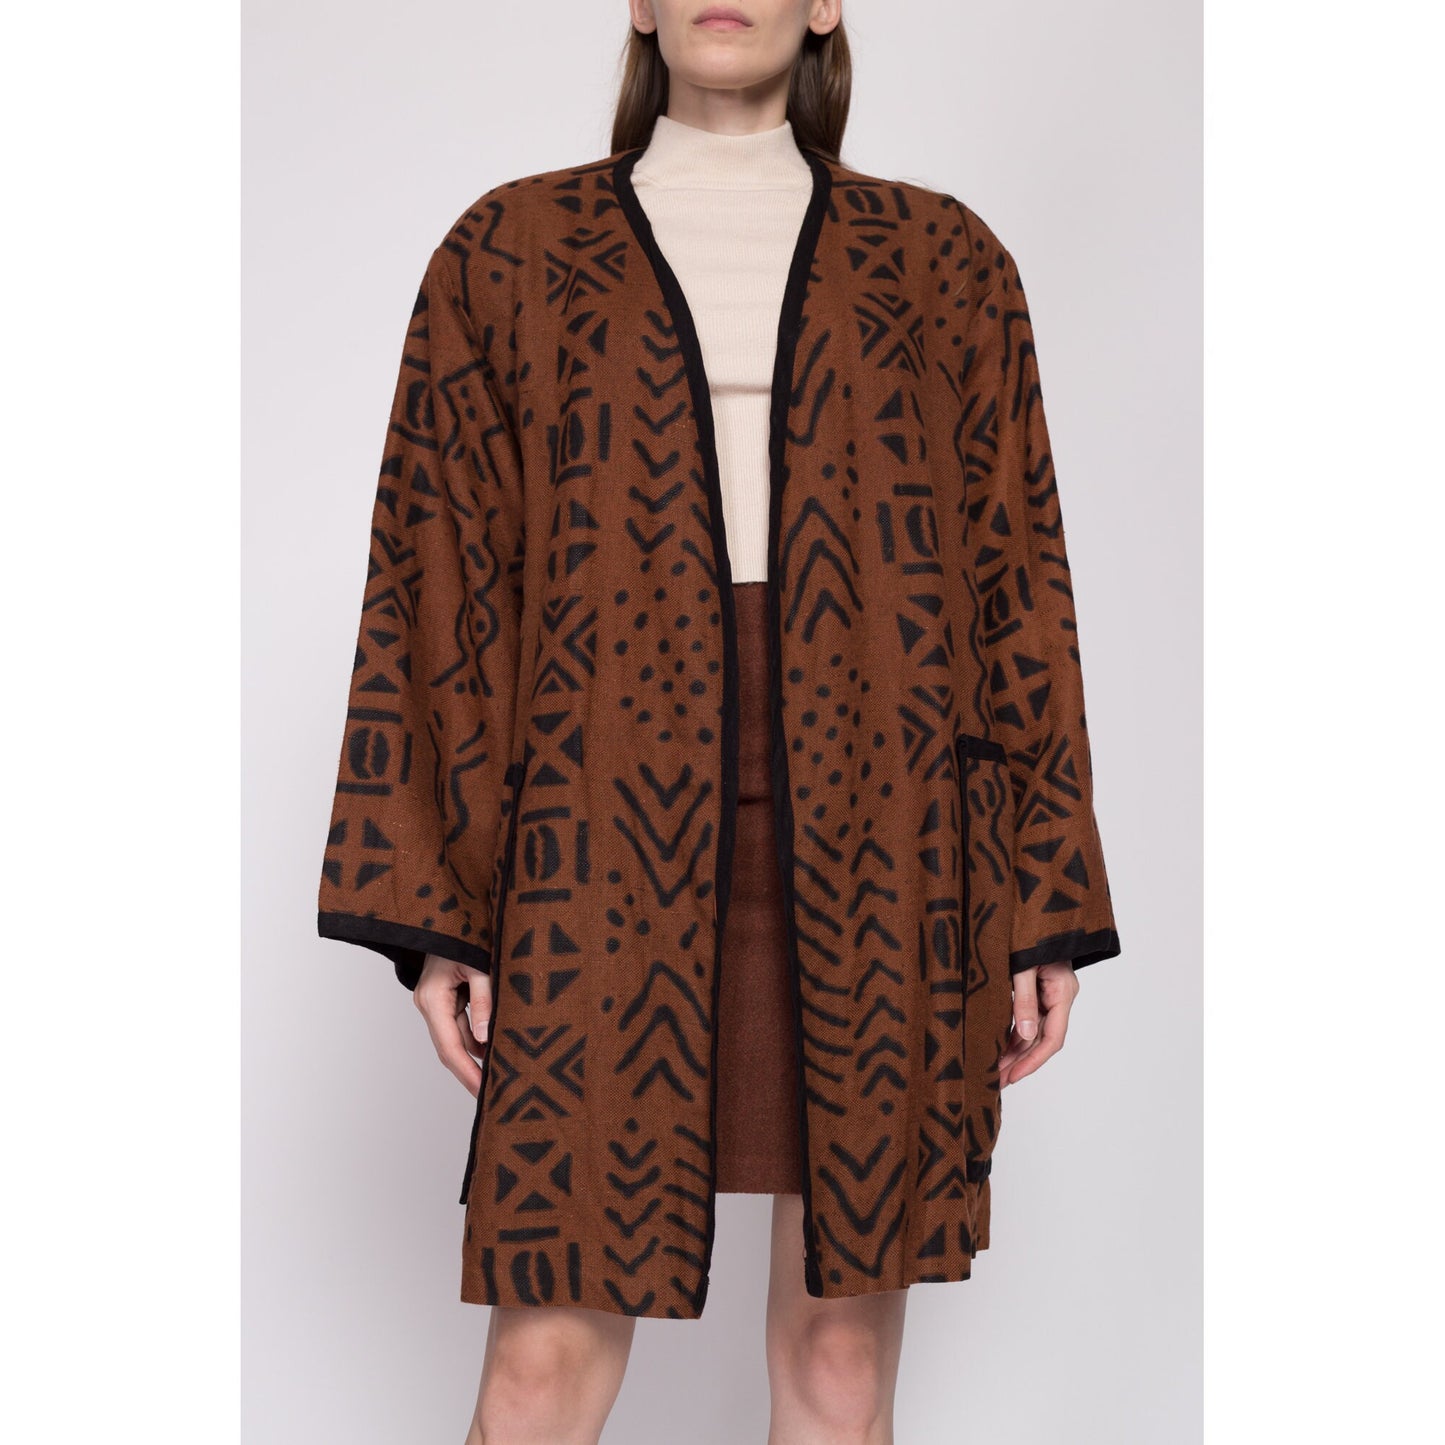 XXL| 80s Boho Brown Linen Open Fit Jacket - One Size | Vintage Fixsun Tribal Print Lightweight Coat